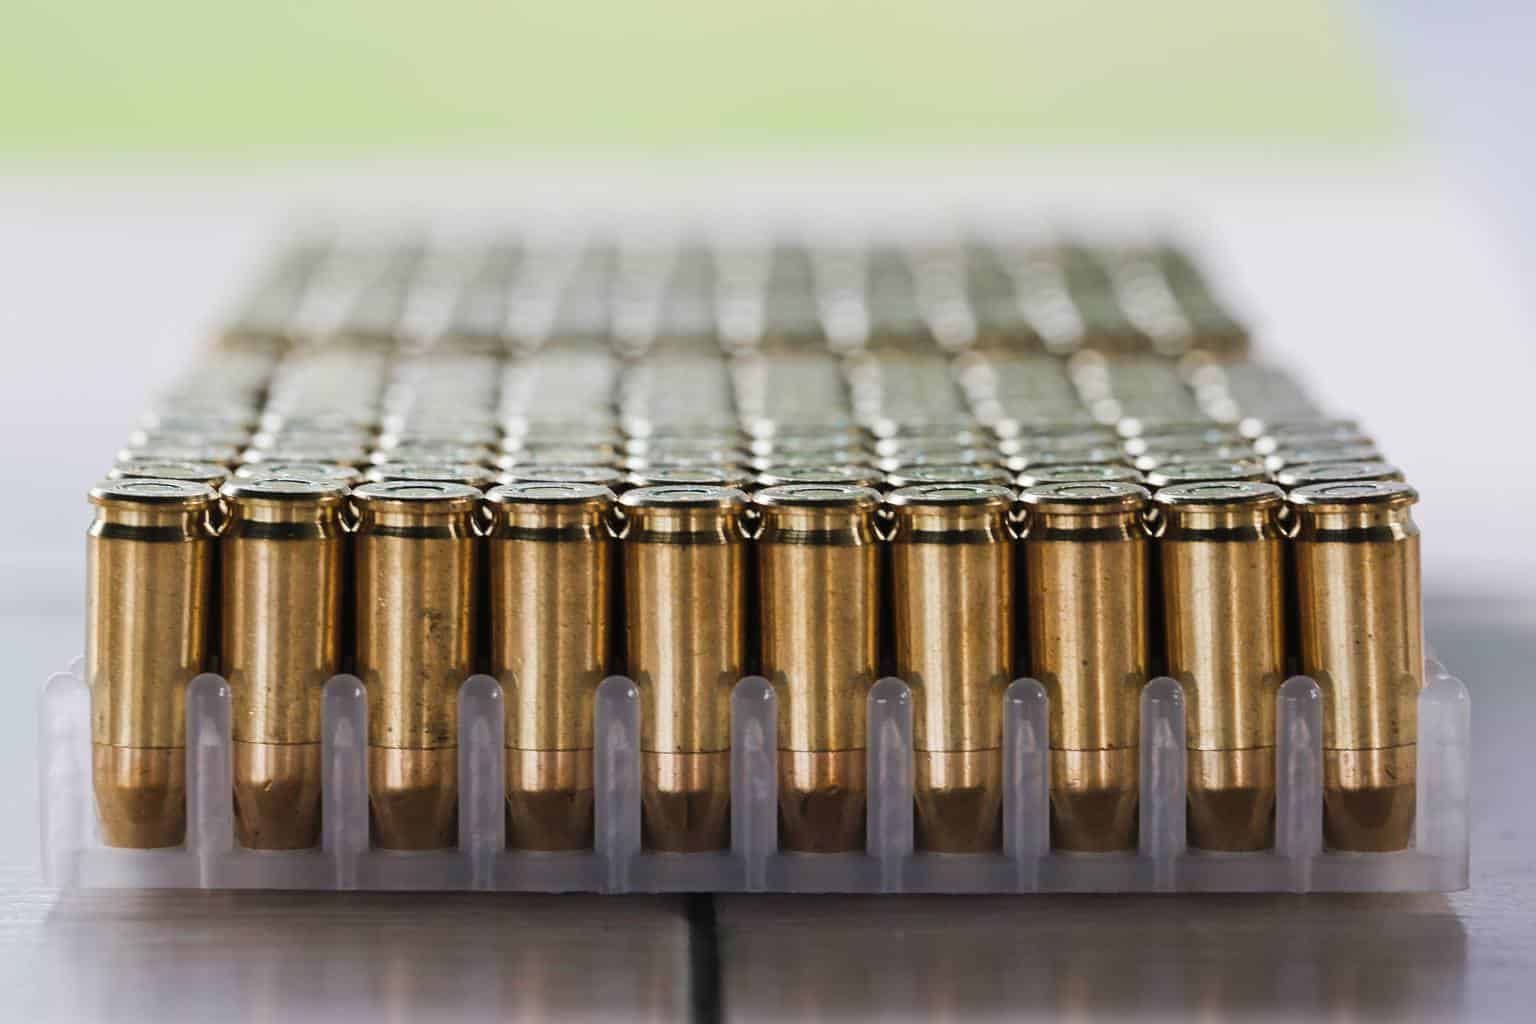 A row of bullets in a gun range in Georgia